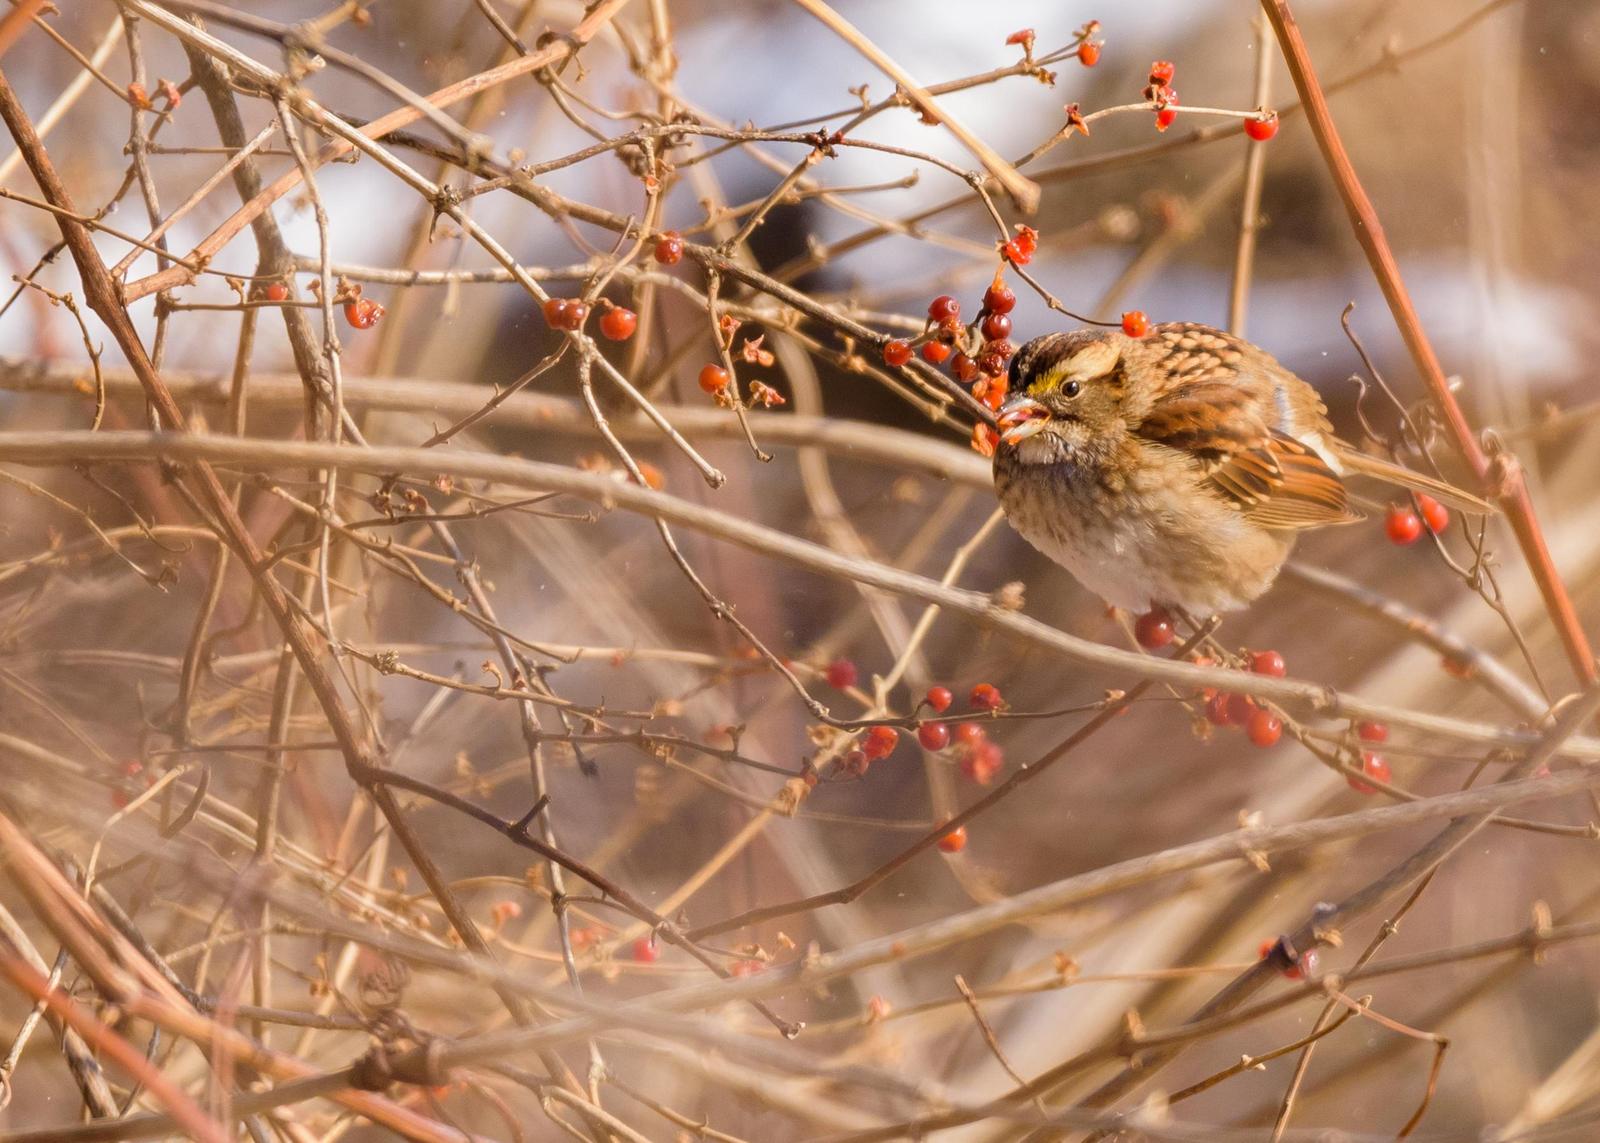 White-throated Sparrow Photo by Keshava Mysore